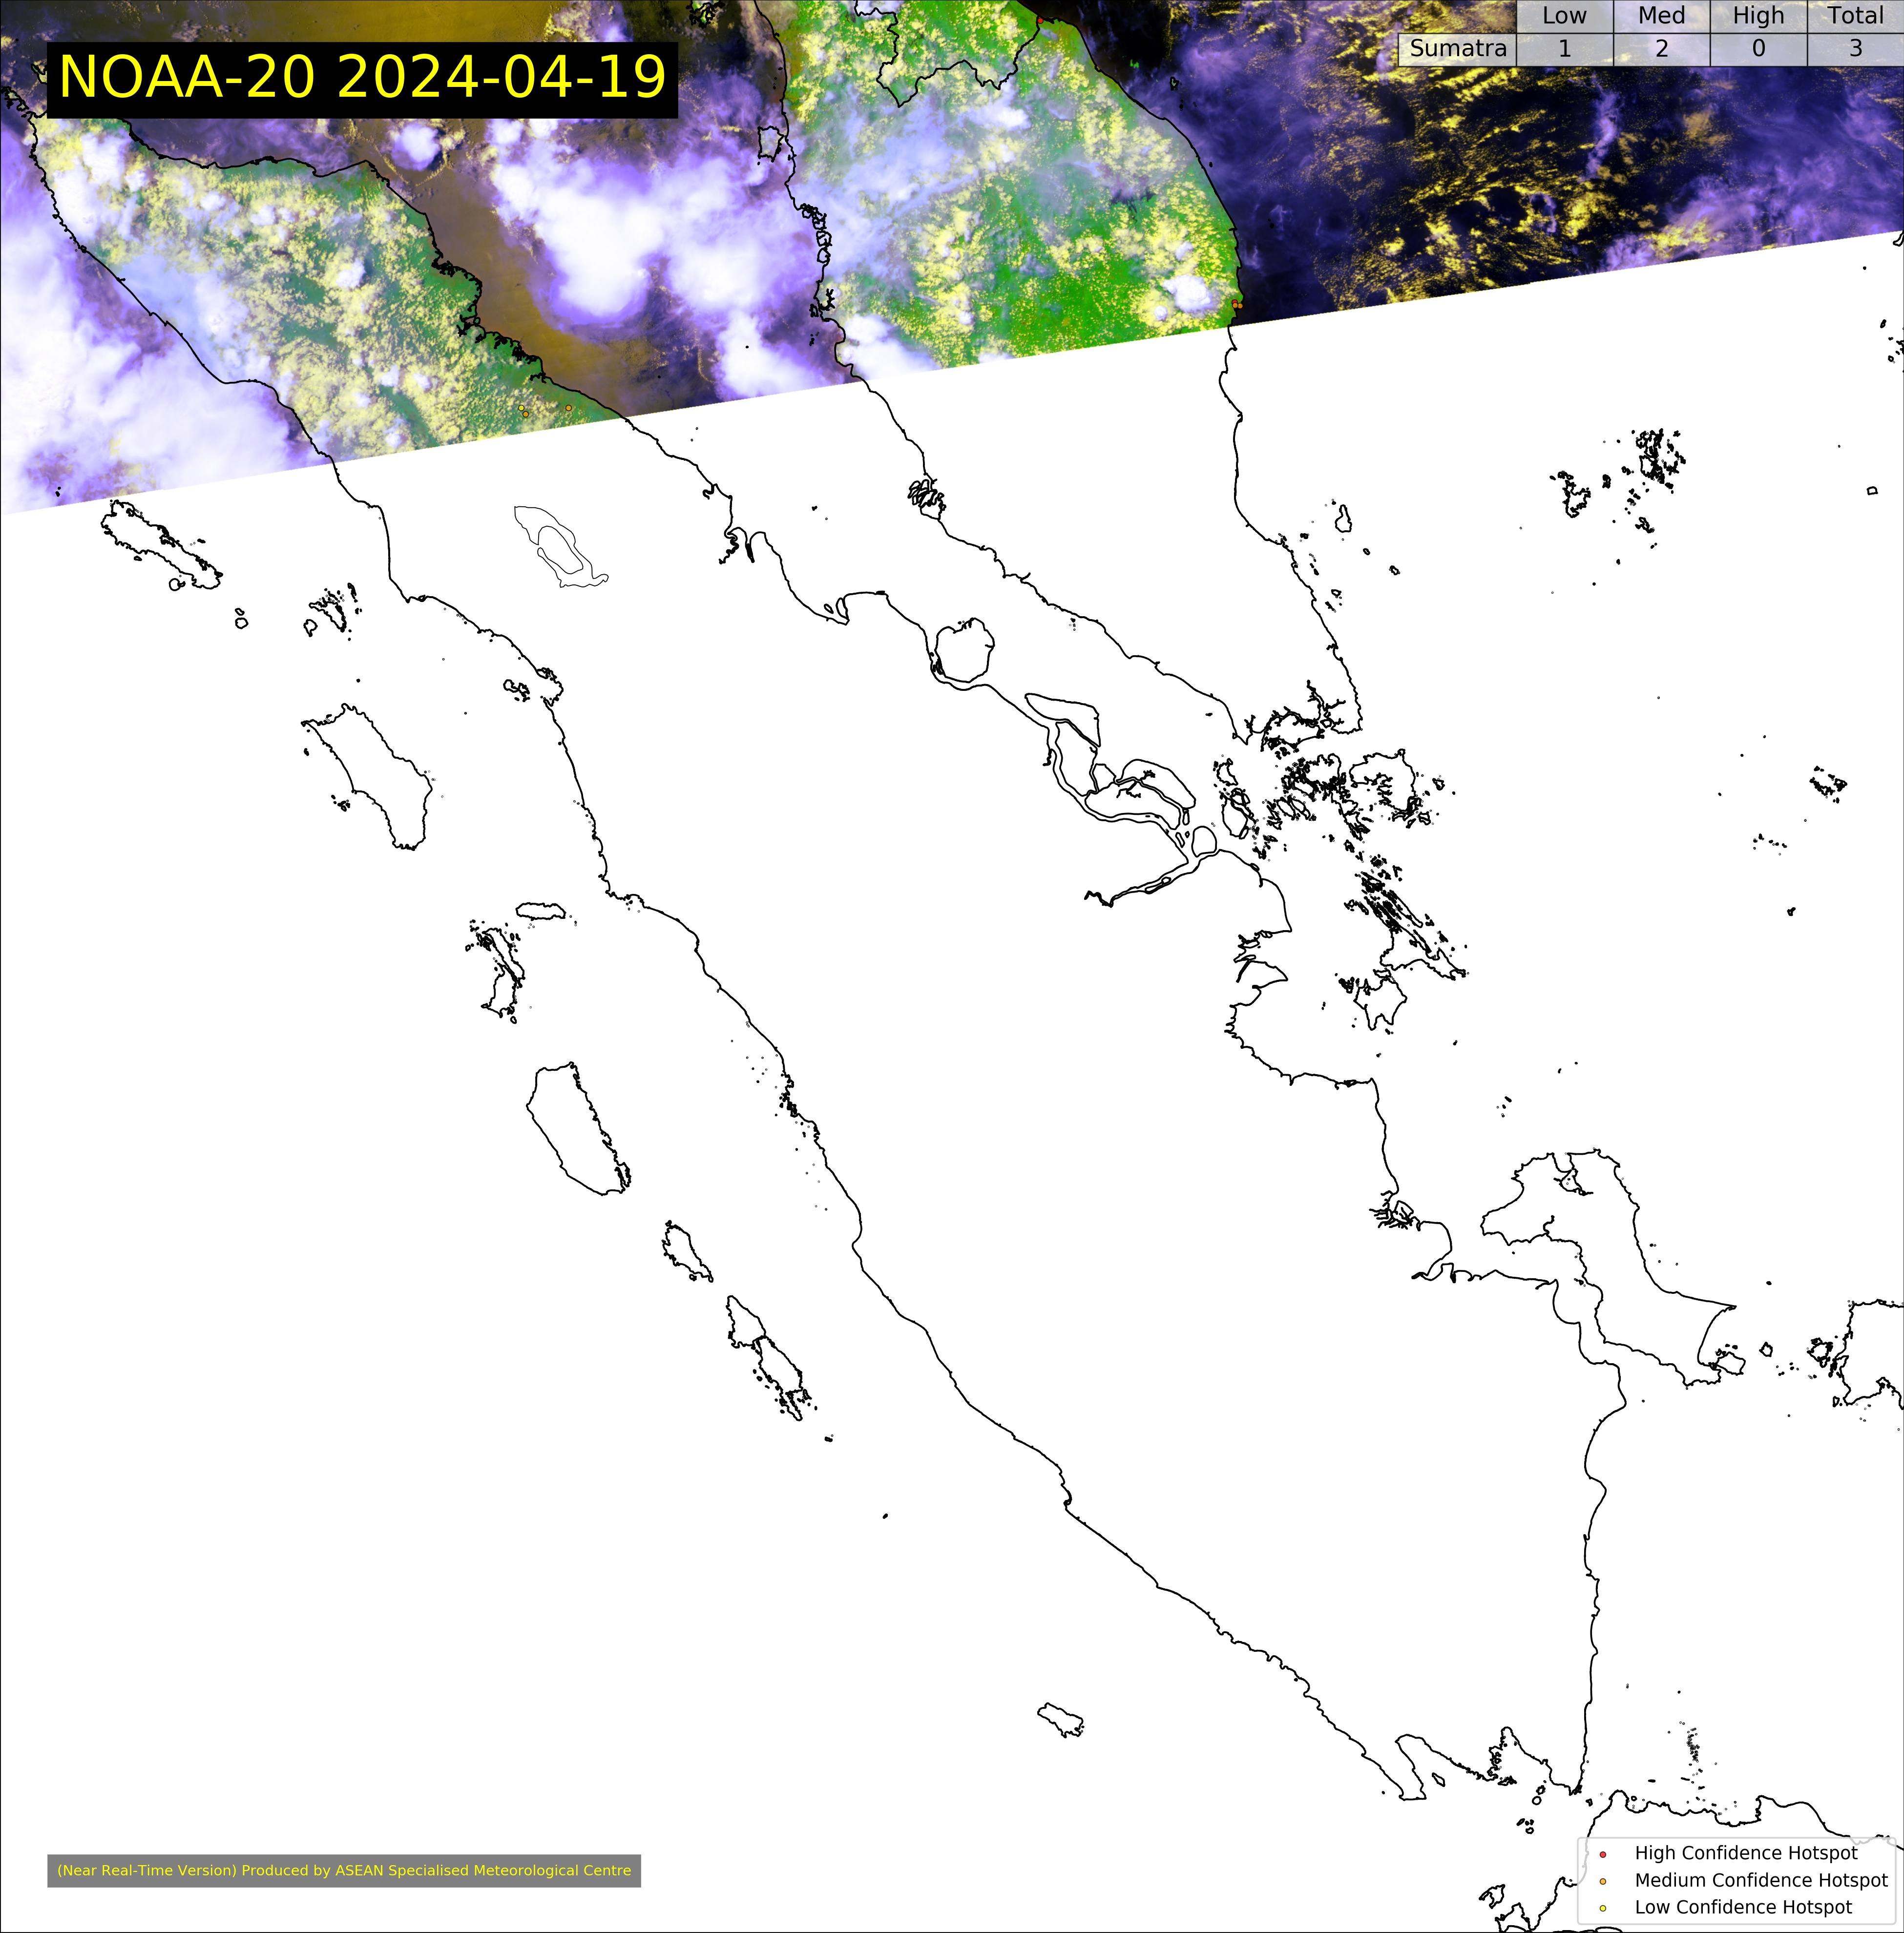 Latest NOAA satellite image